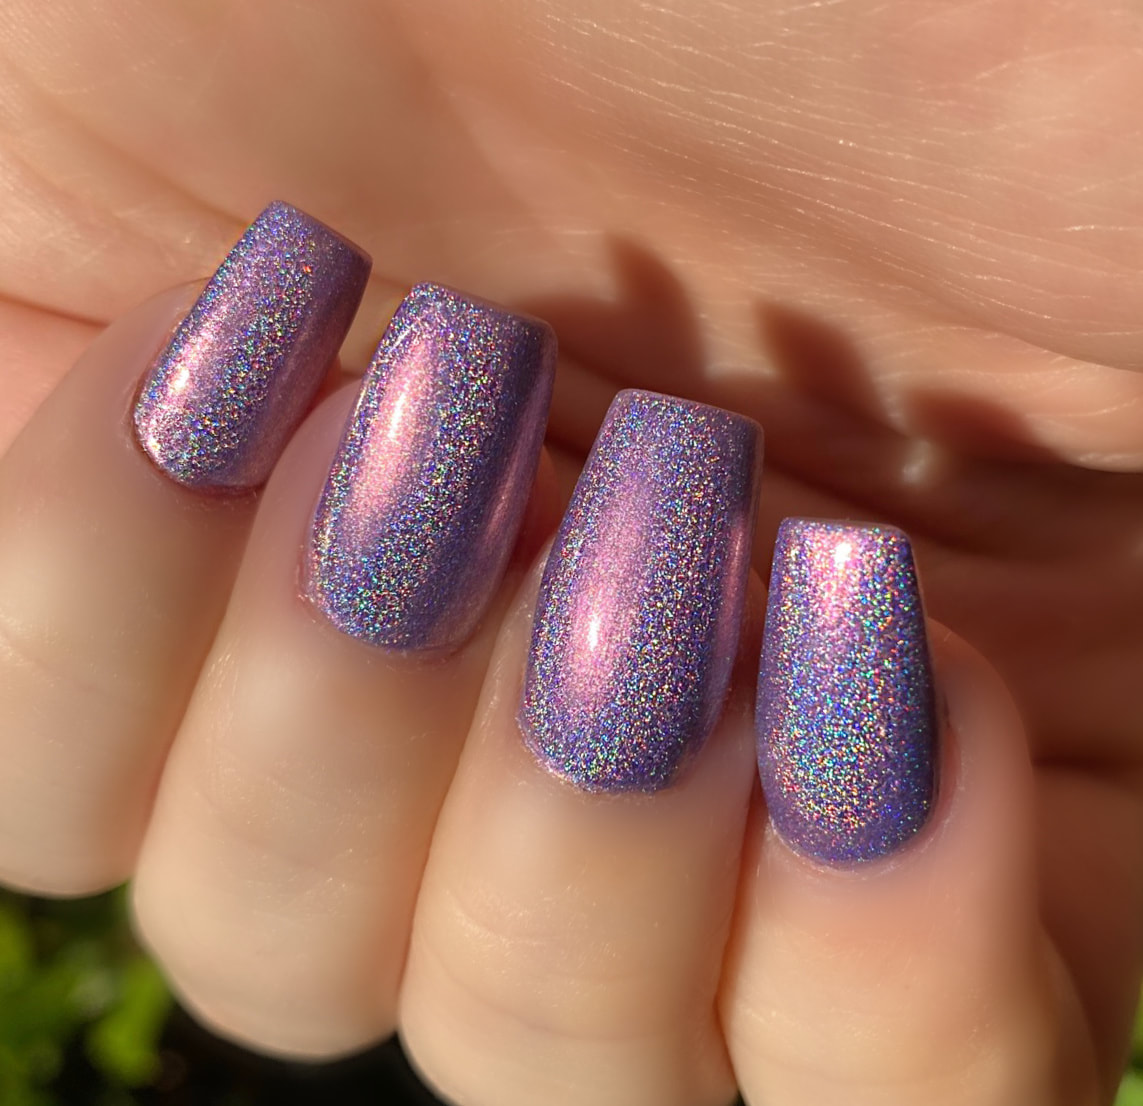 Karma Purple Pink Holographic Glitter Nail Polish – F.U.N LACQUER